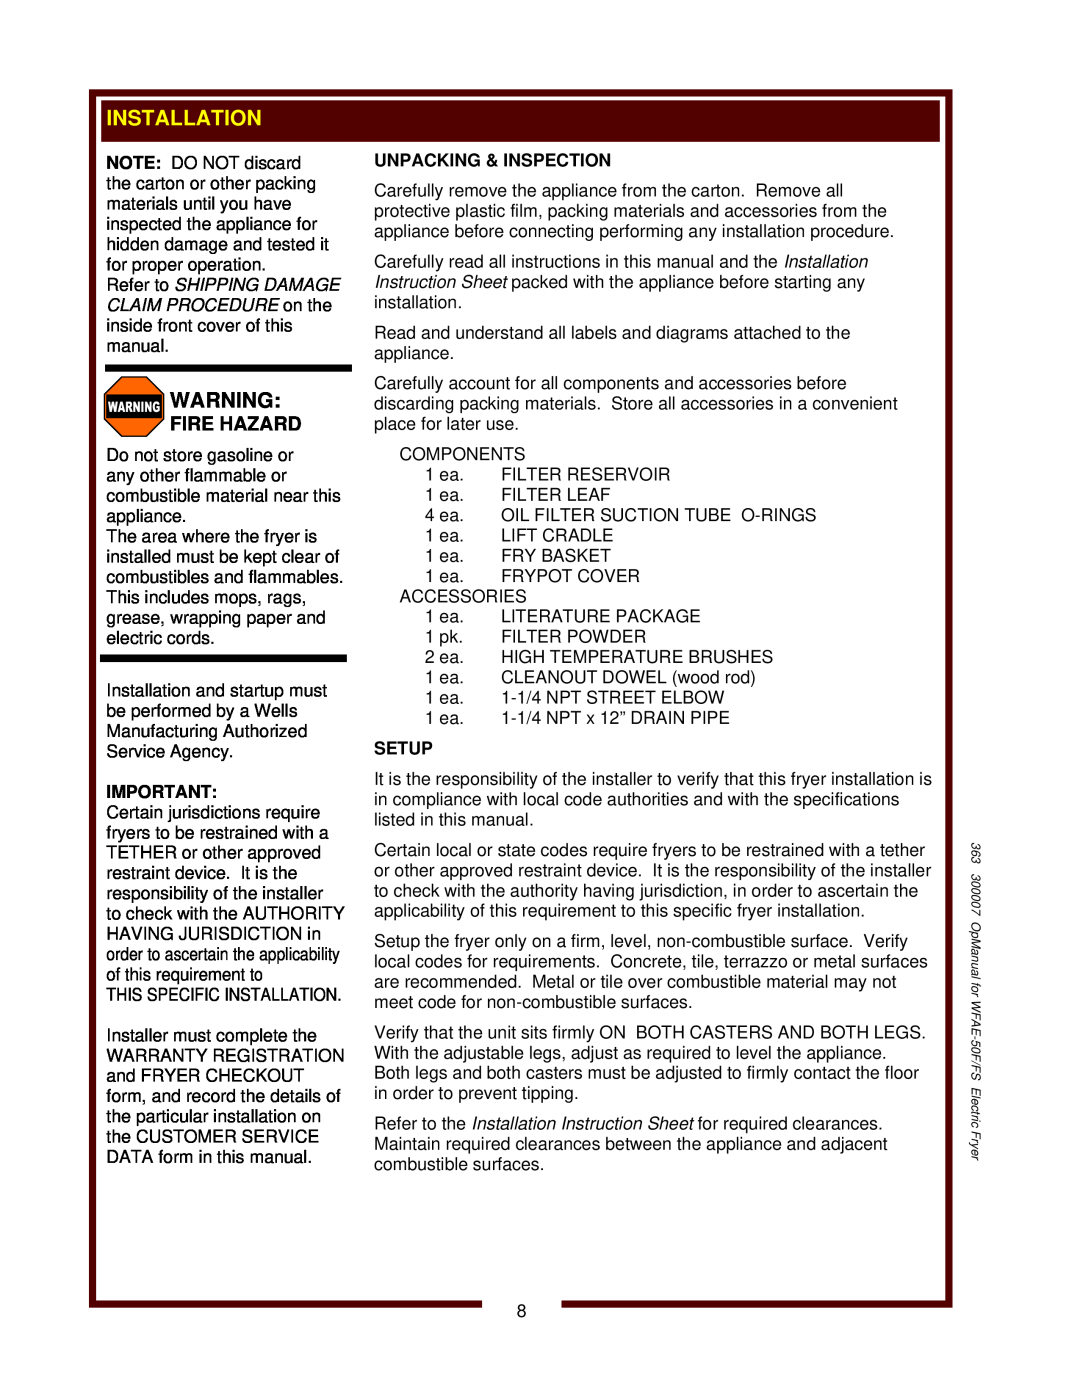 Wells WFAE-55F operation manual 363 300007 OpManual for WFAE-50F/FSElectric Fryer 